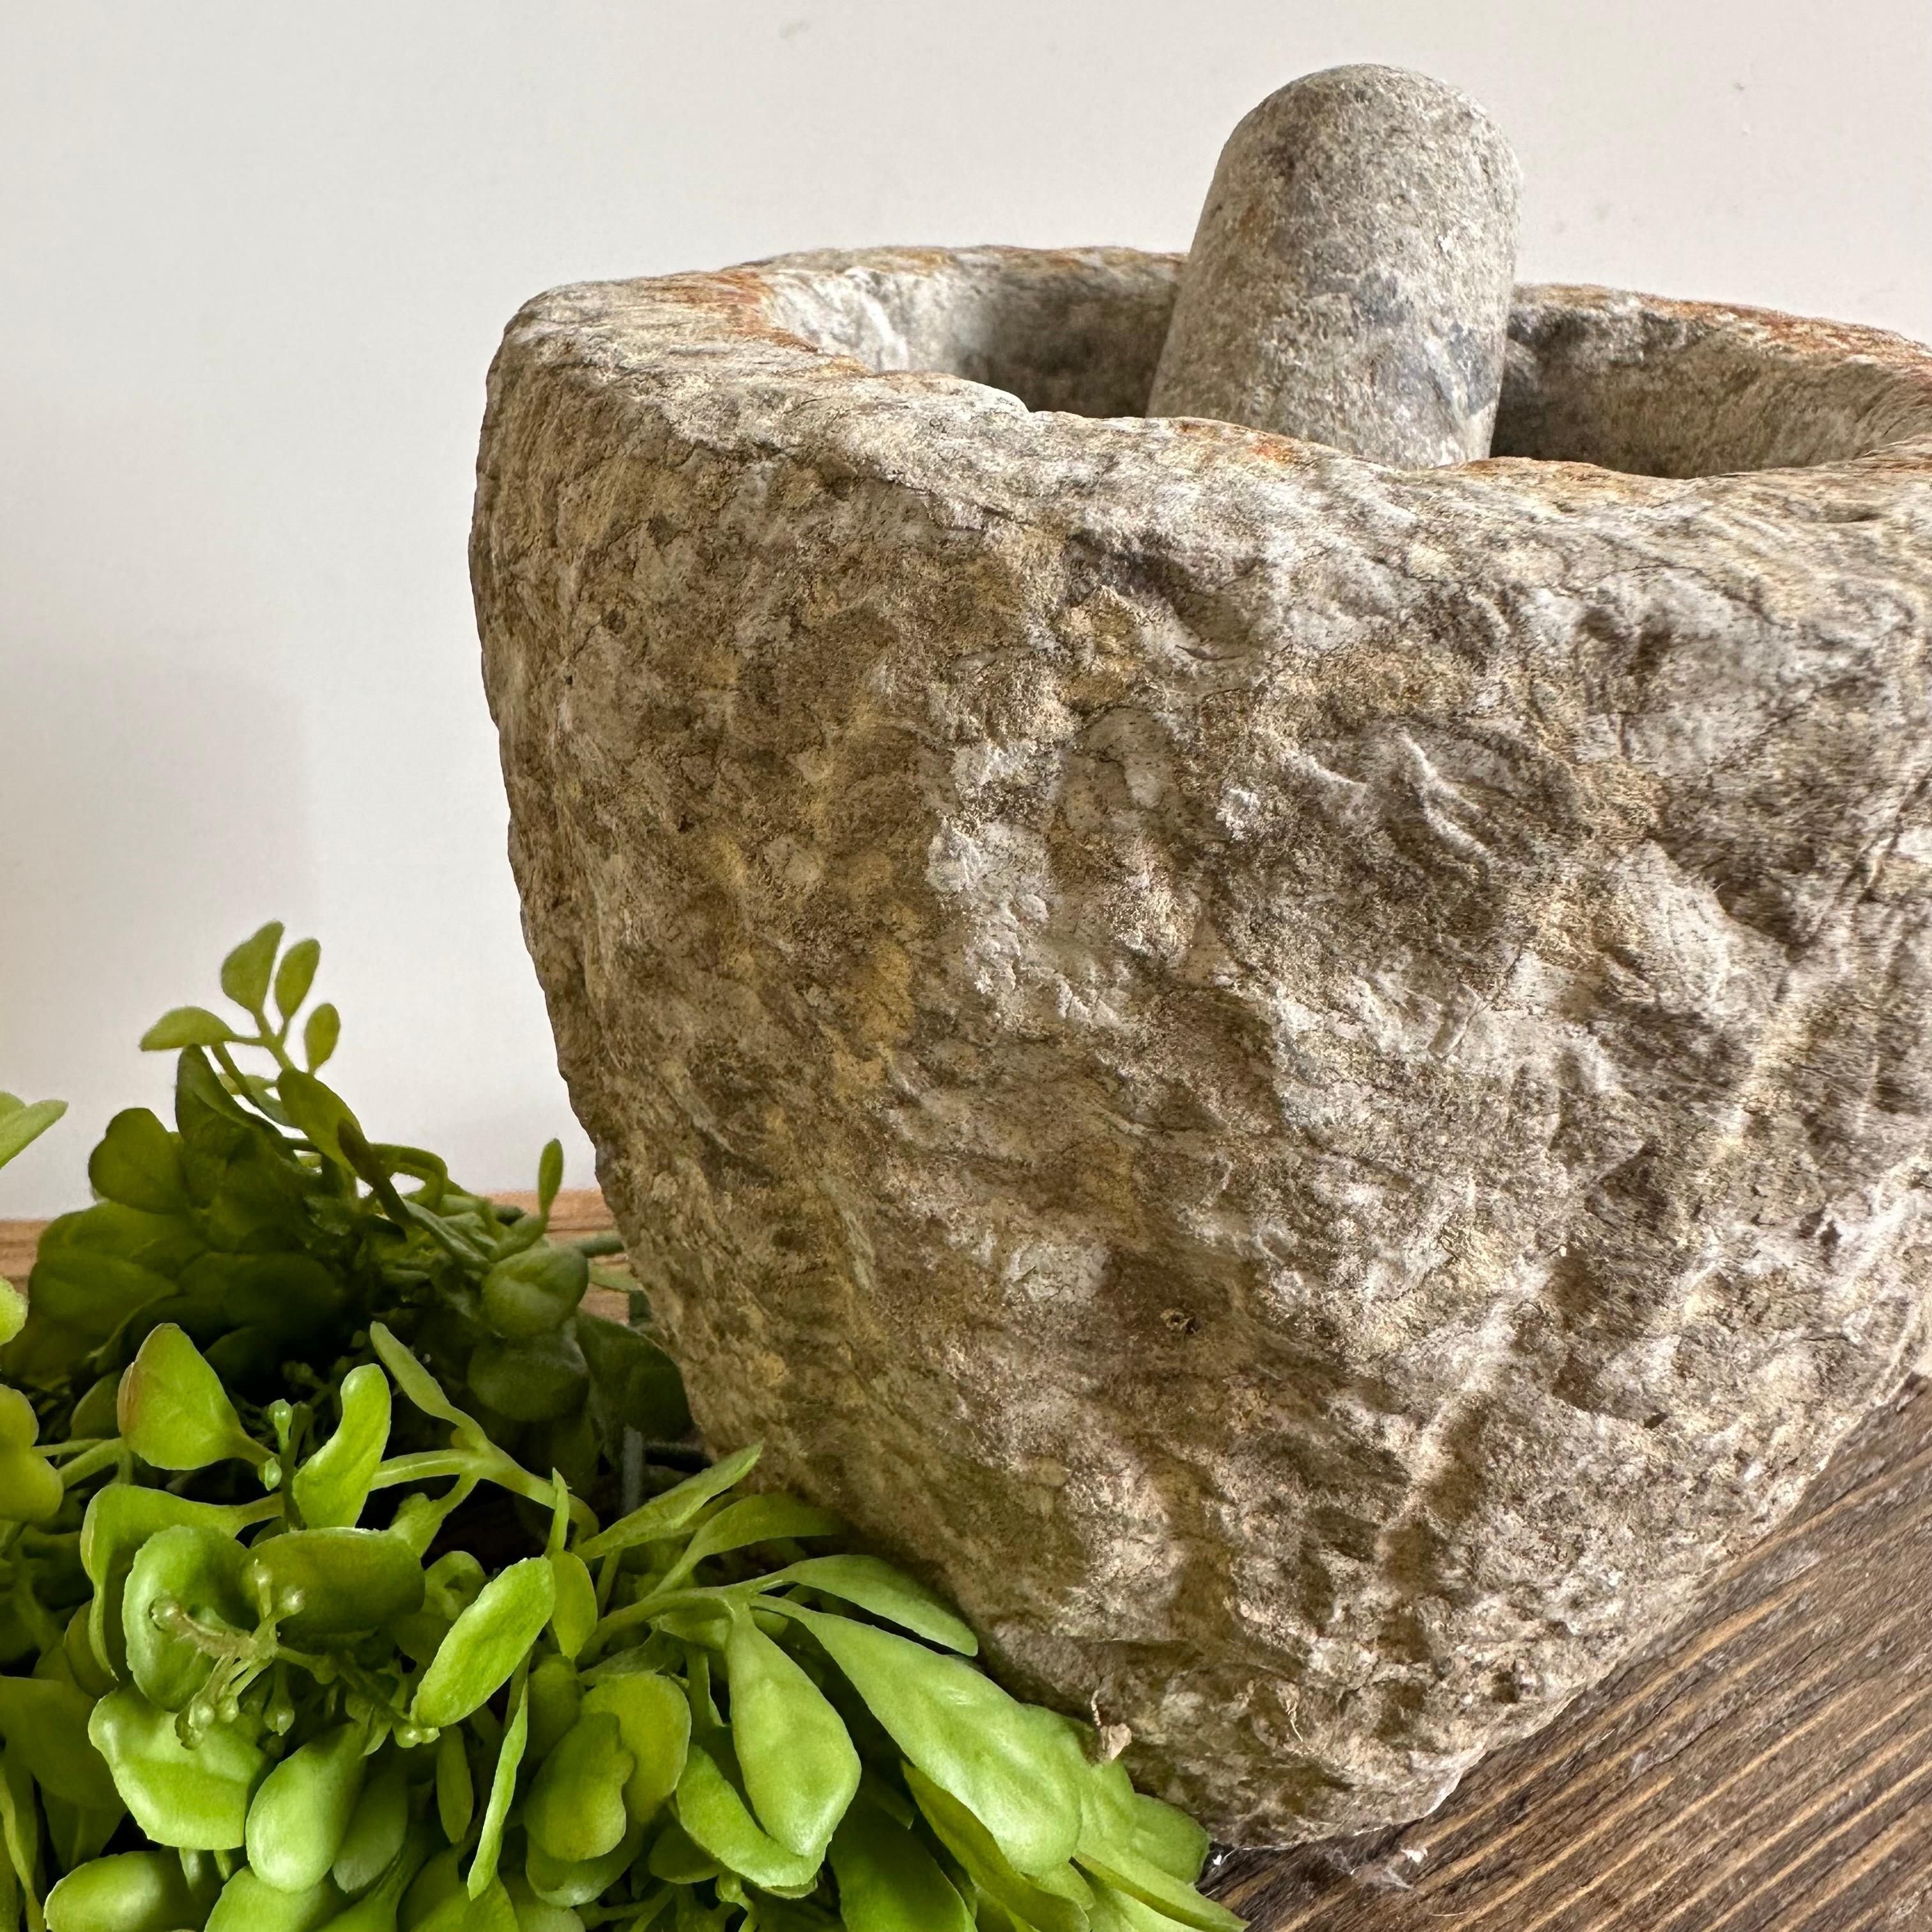 Antique Stone Mortar and Pestle Bowl Set 1